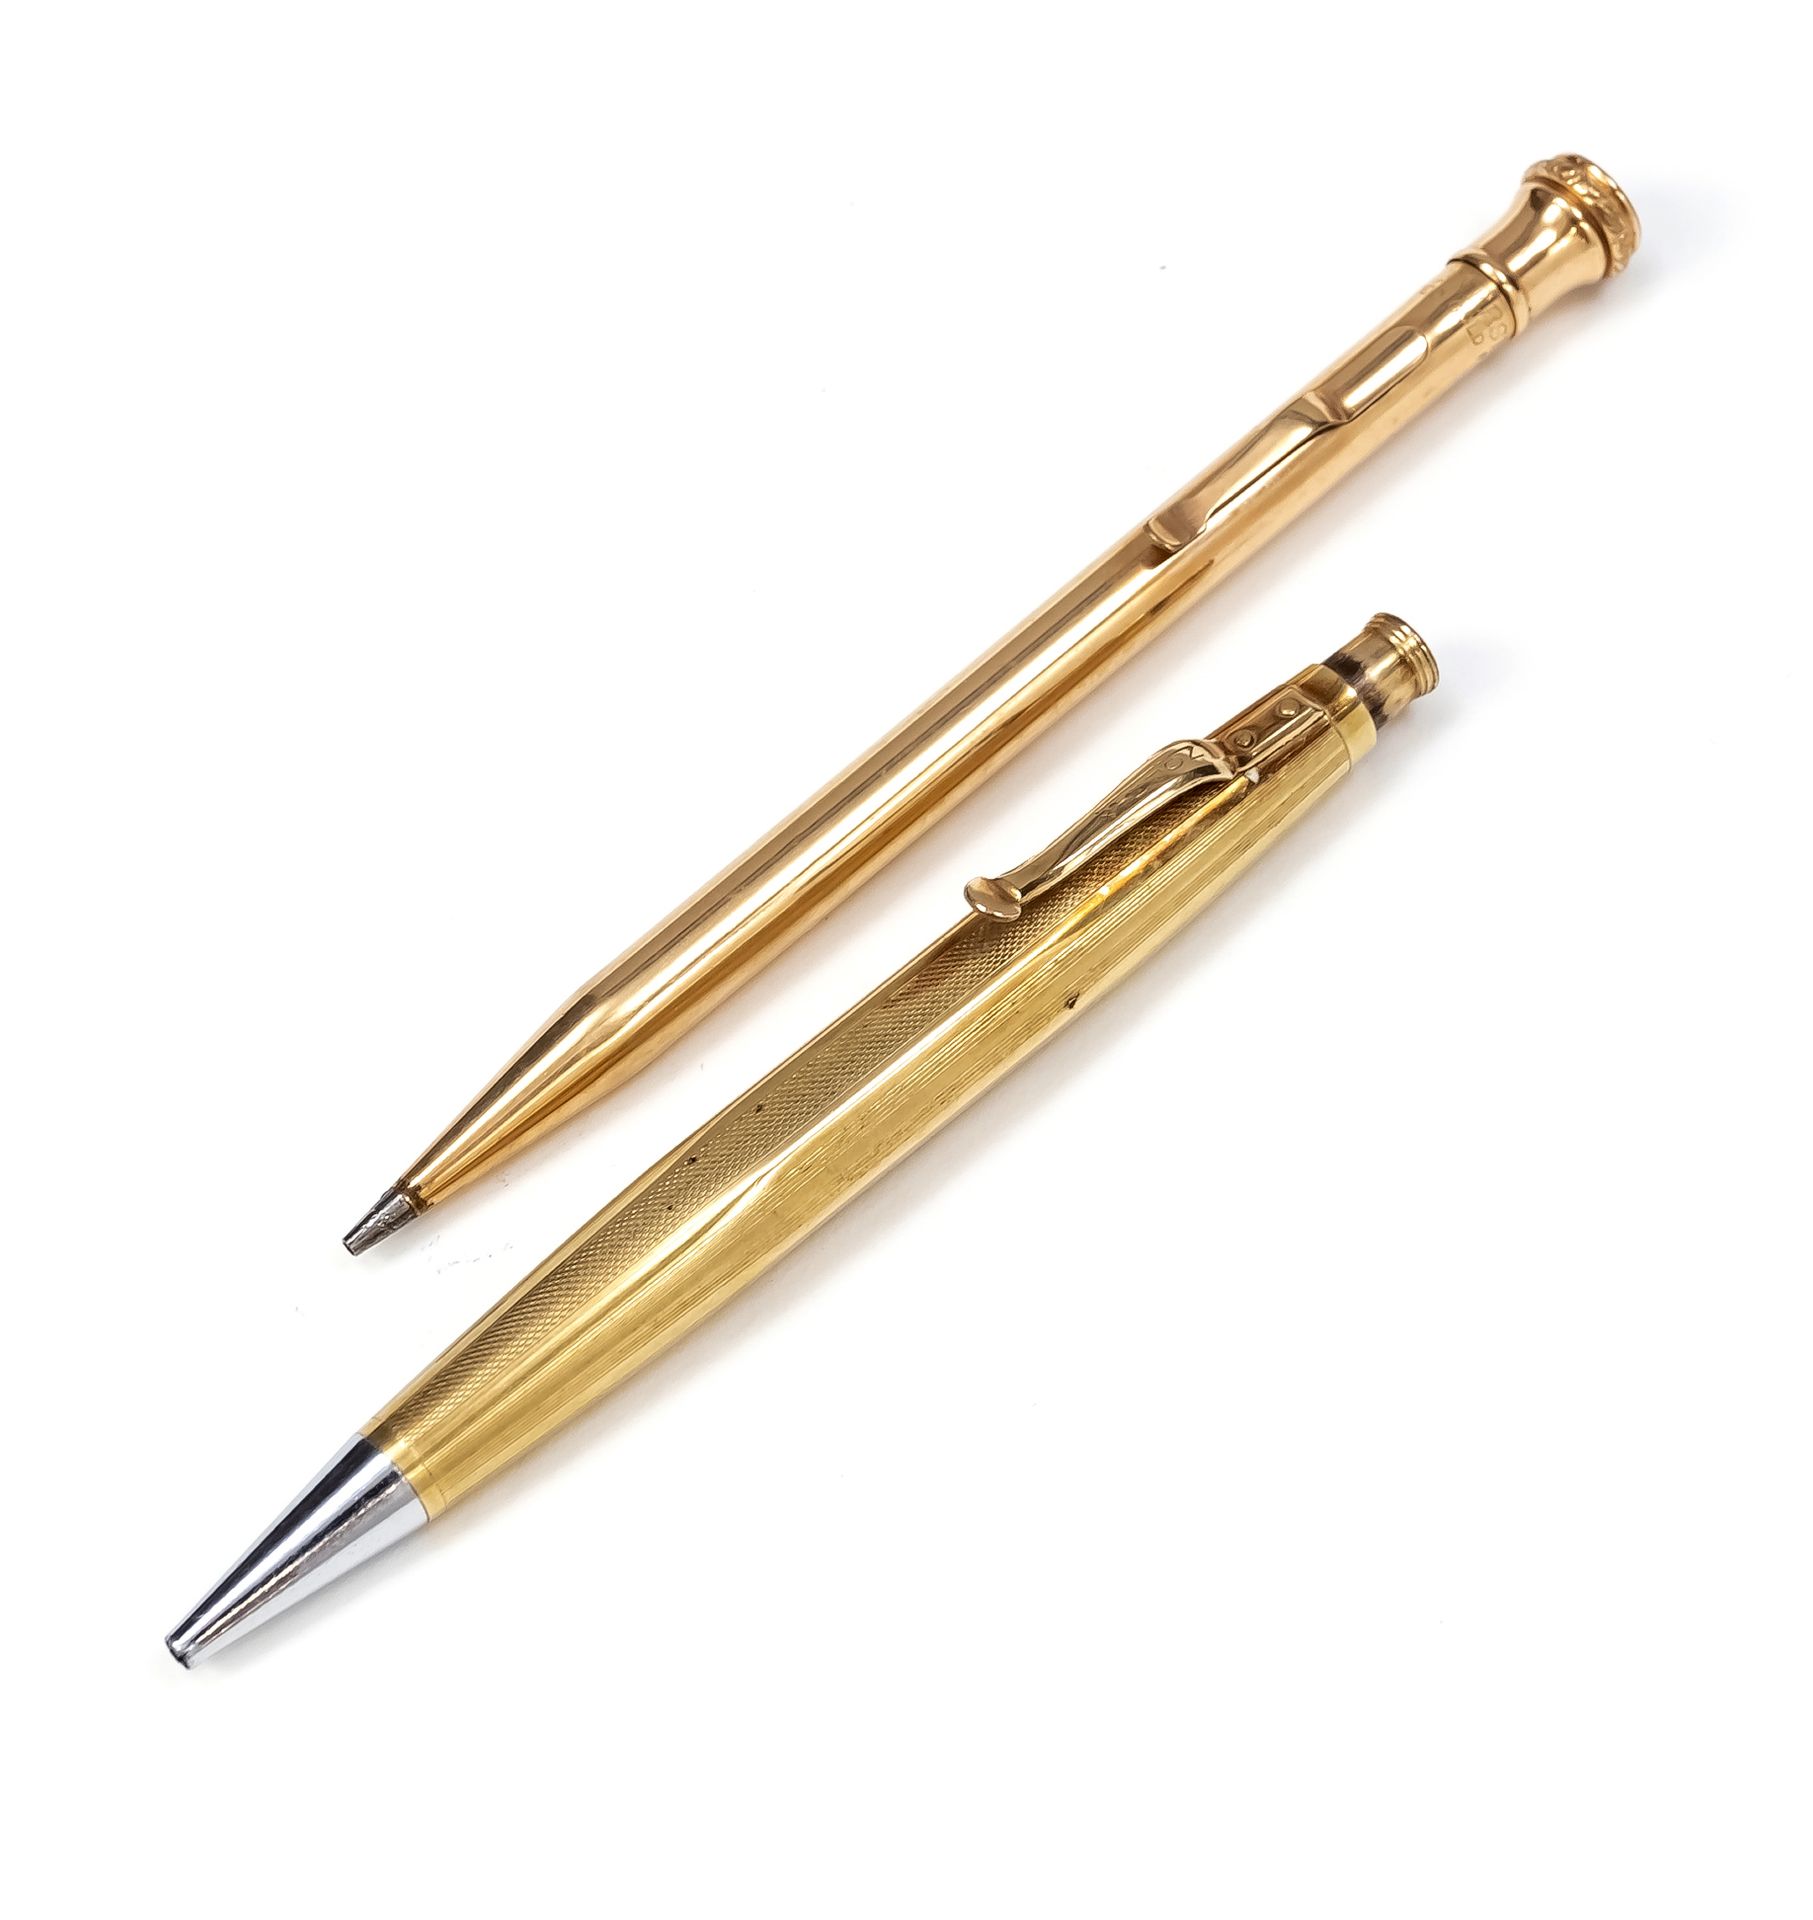 Null 推进铅笔和机械铅笔，20世纪下半叶，每个都有镀金的外壳，1倍凹陷，长分别为12和13.5厘米。